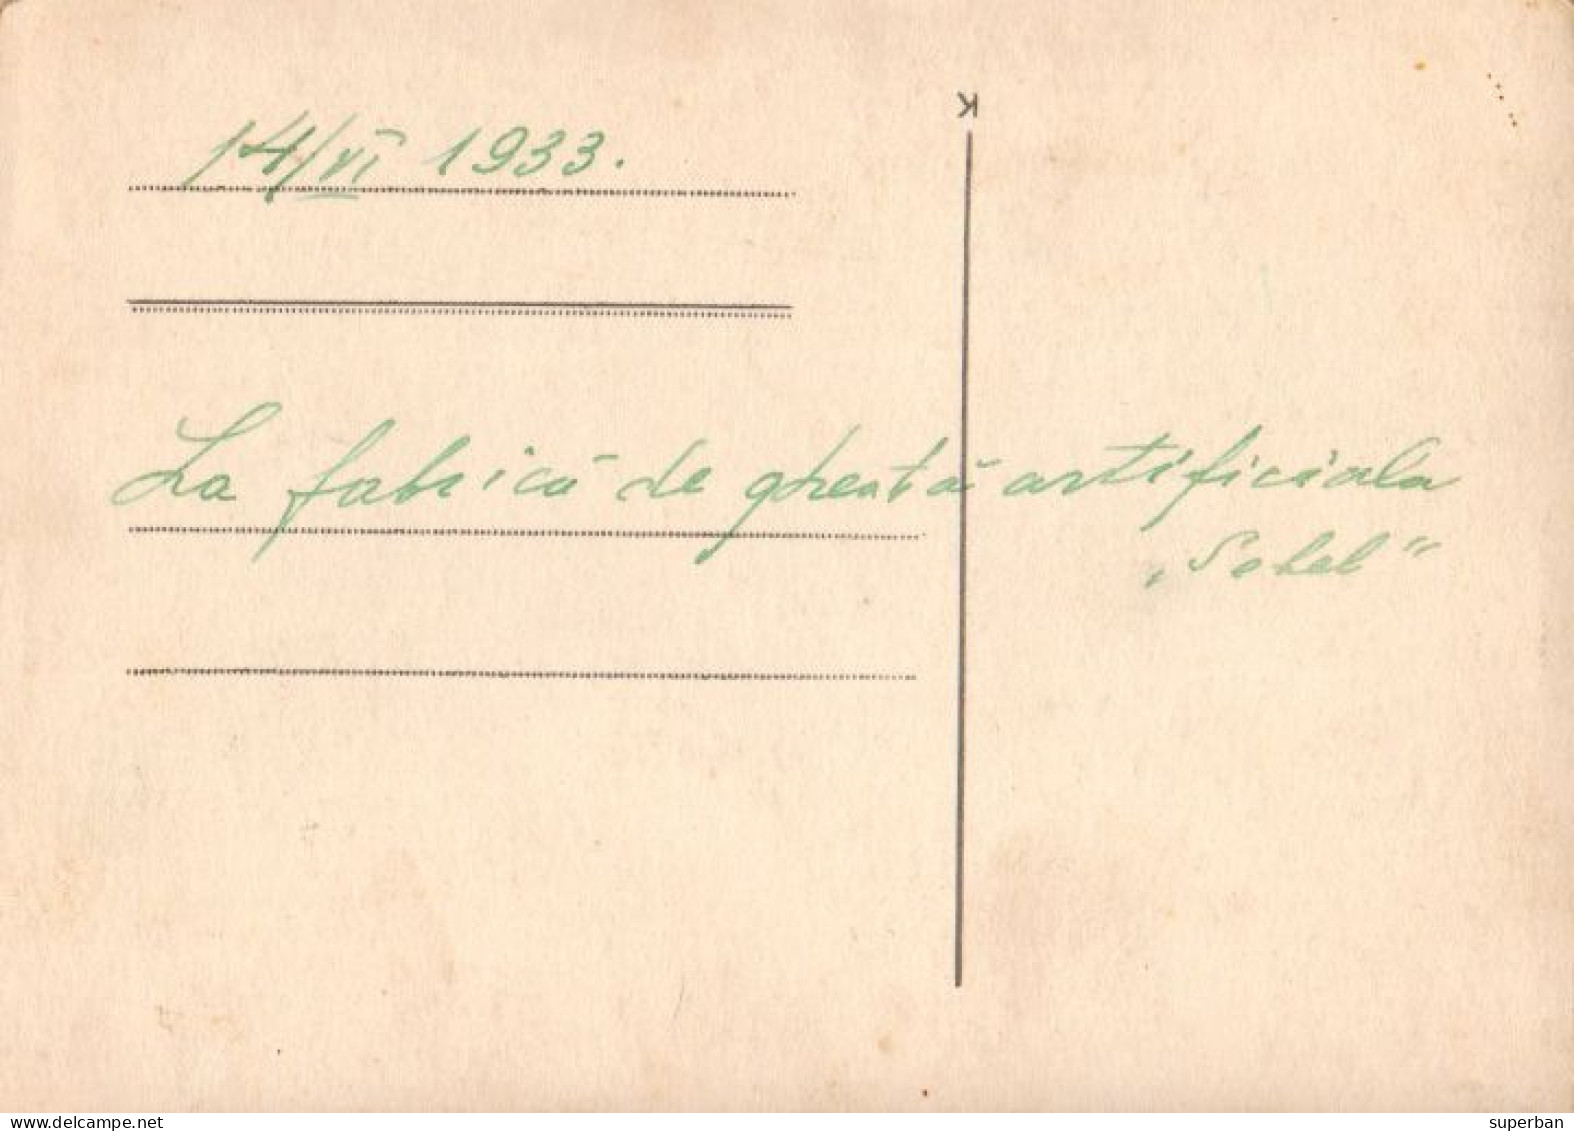 CHISINAU : LA FABRICA De GHEATA ARTIFICIALA SEBEL - CARTE VRAIE PHOTO / REAL PHOTO [ 8,5 X 11,5 Cm ] - 14 VI 1933 (an655 - Moldavia